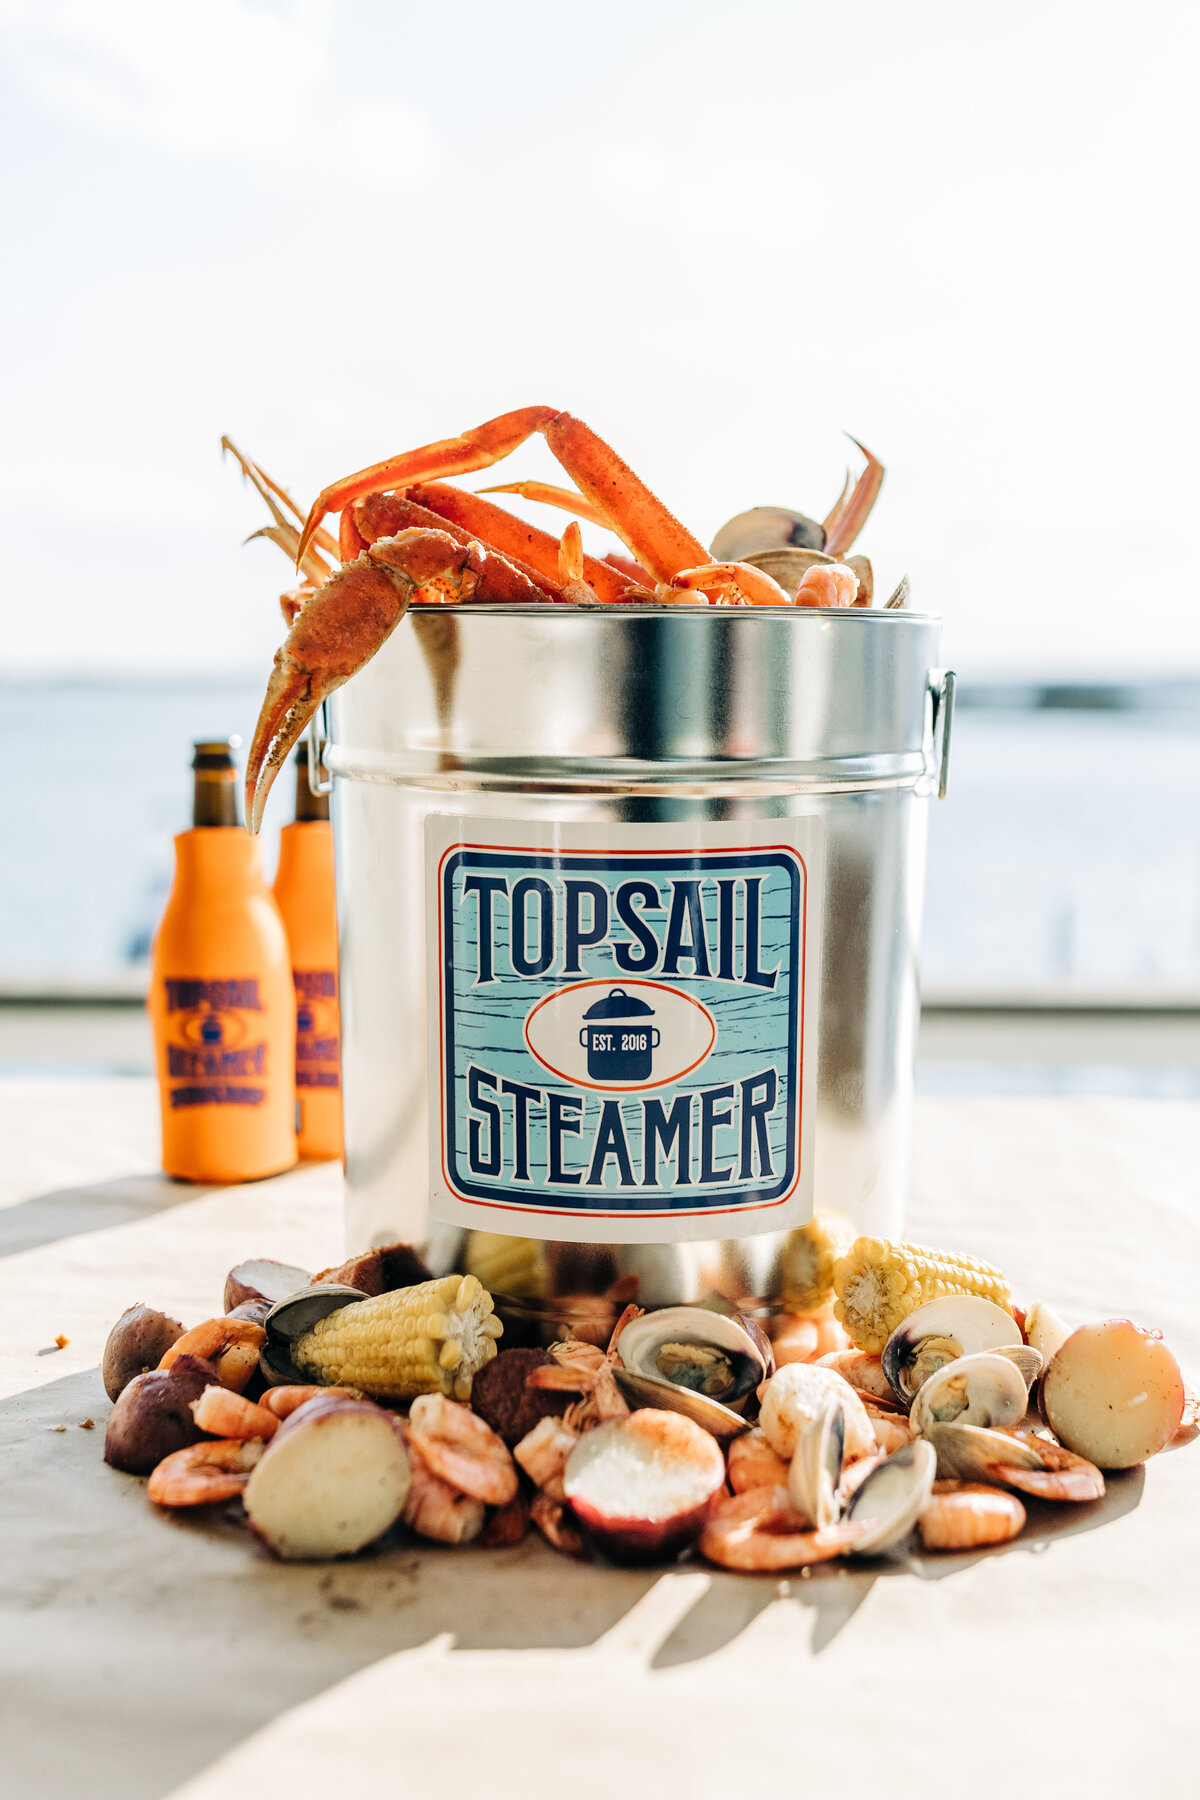 Chesapeake Seafood Steamer Pot - Grilling 24x7